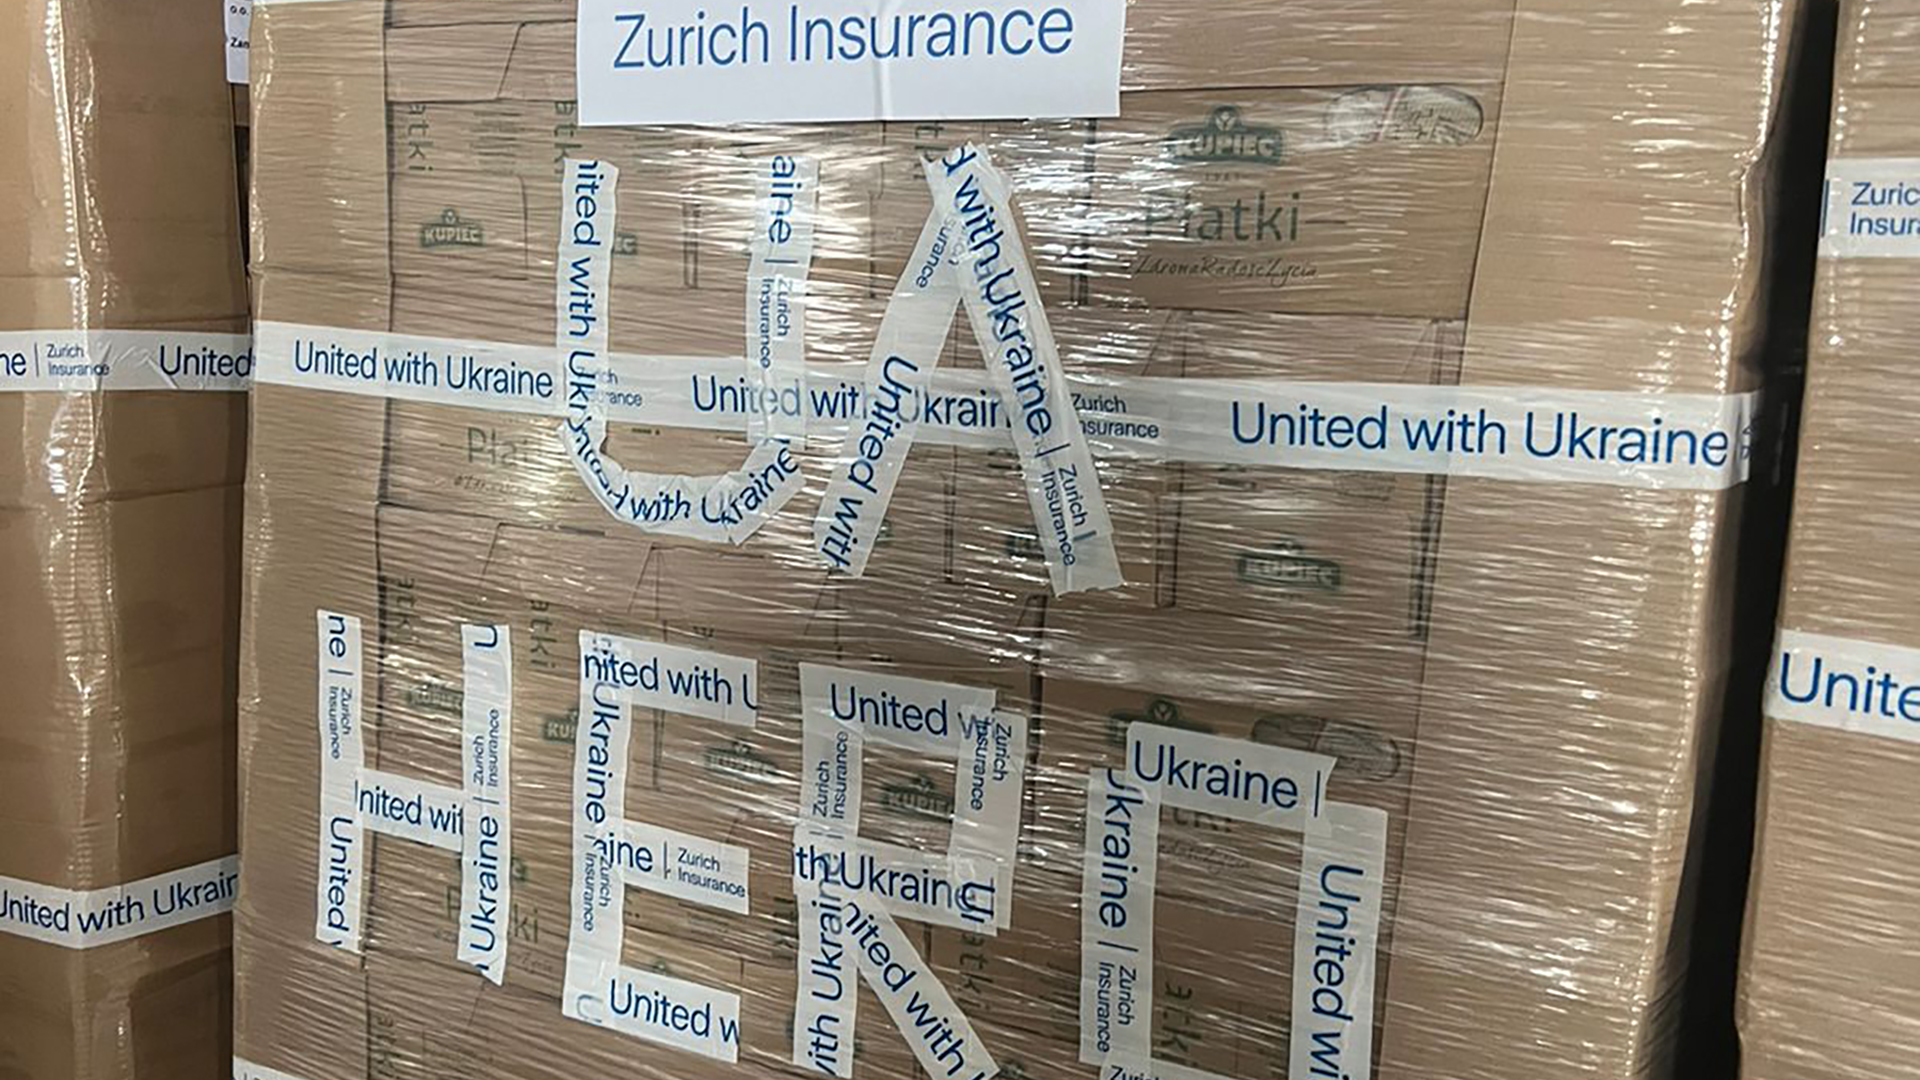 Humanitarian aid from Zurich